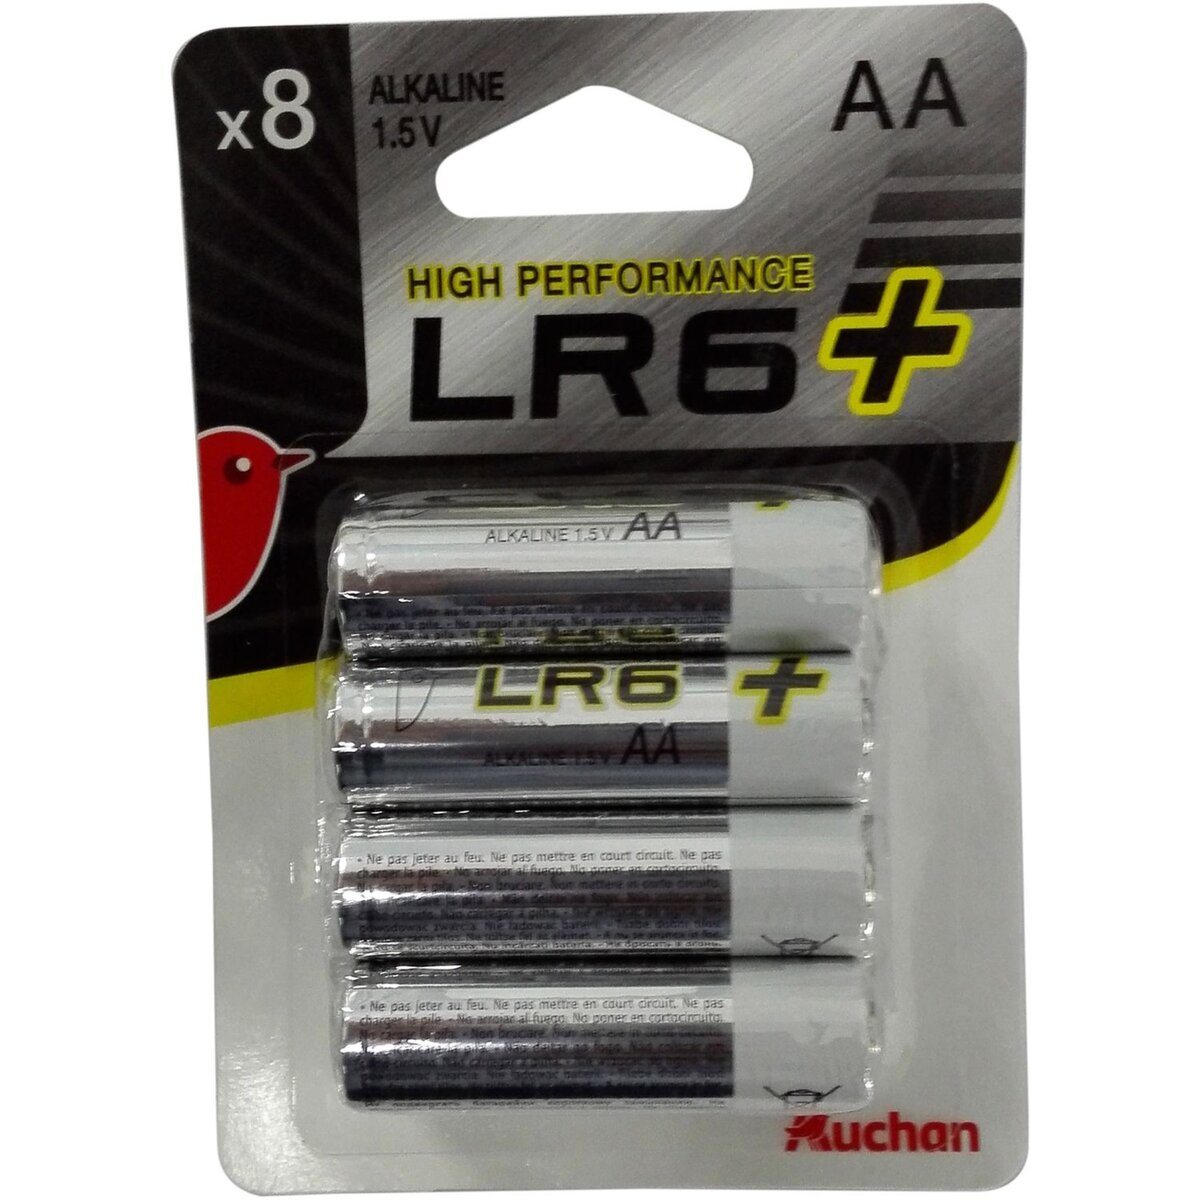 AUCHAN Auchan Piles AA/LR06+ alcalines 1.5v high performance x8 8 pièces